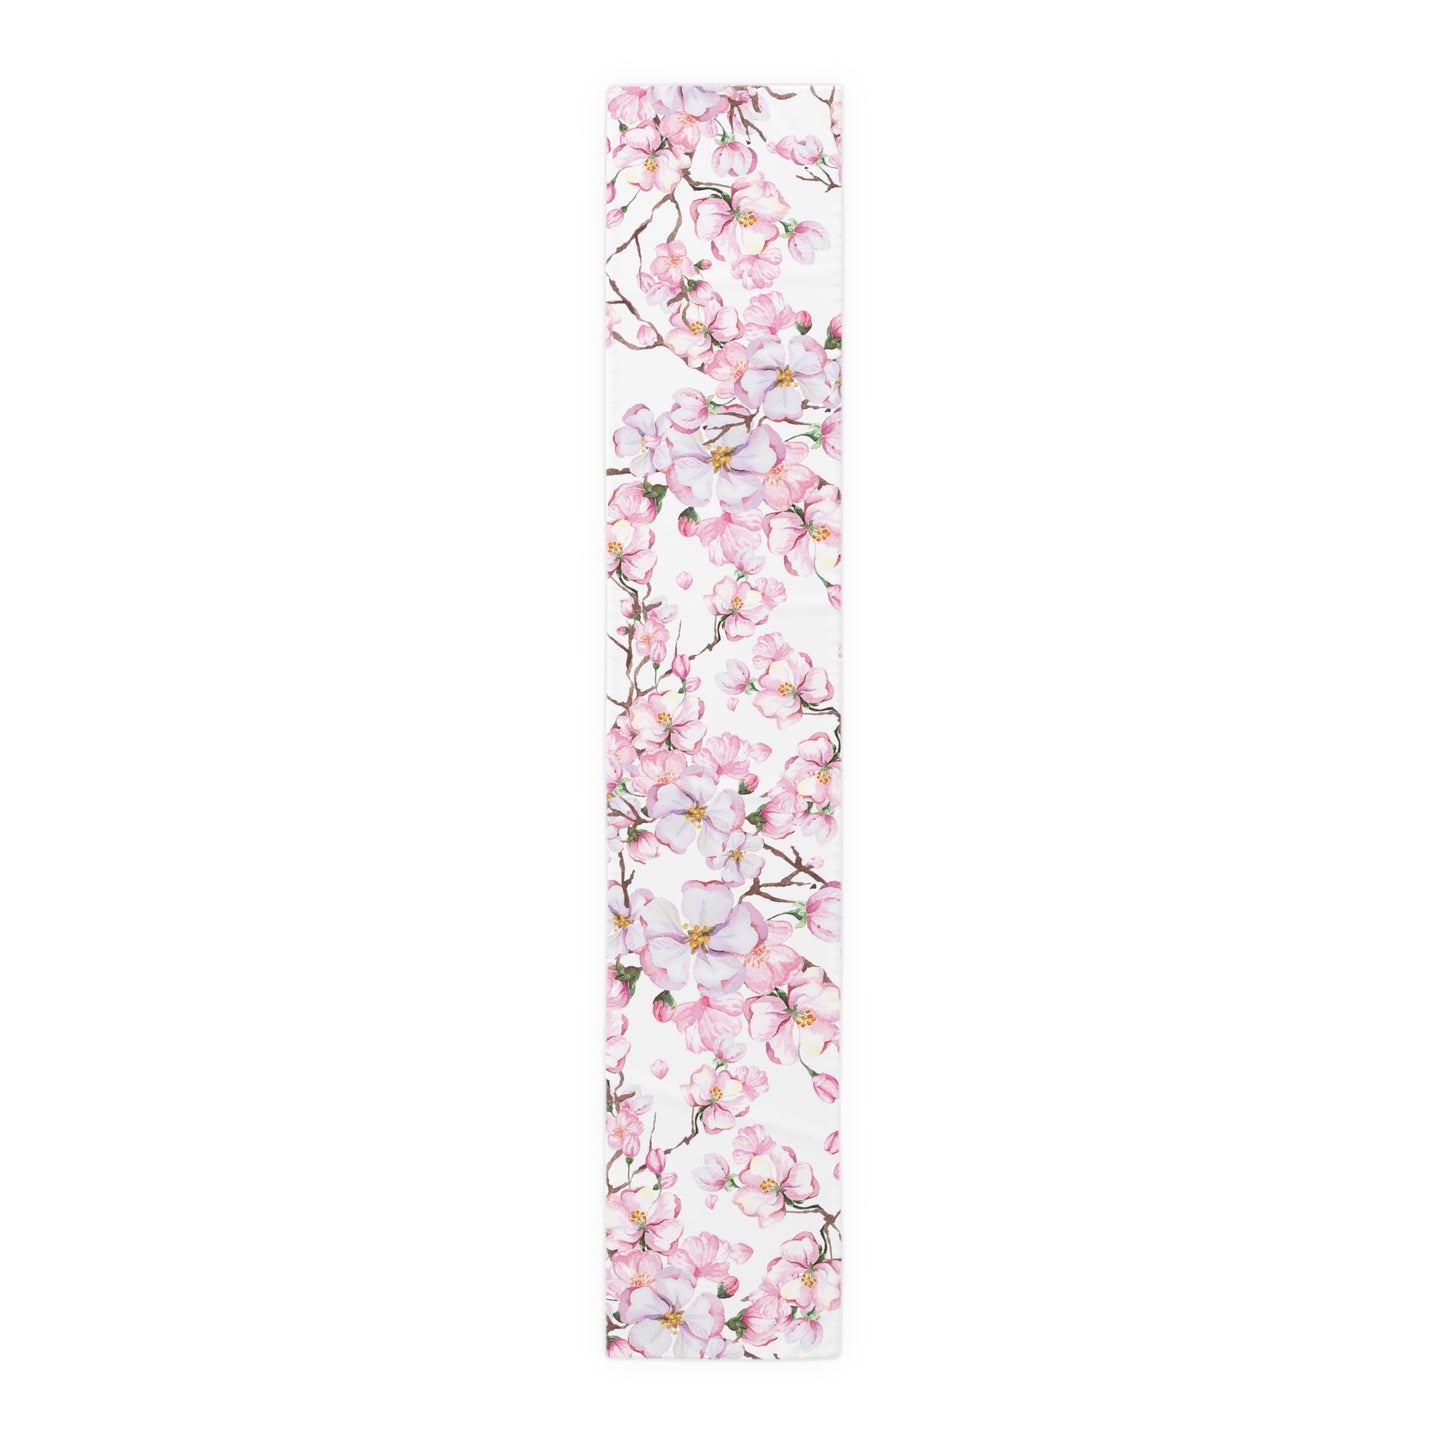 Cherry Blossom Table Runner / Pink Floral Table Runner